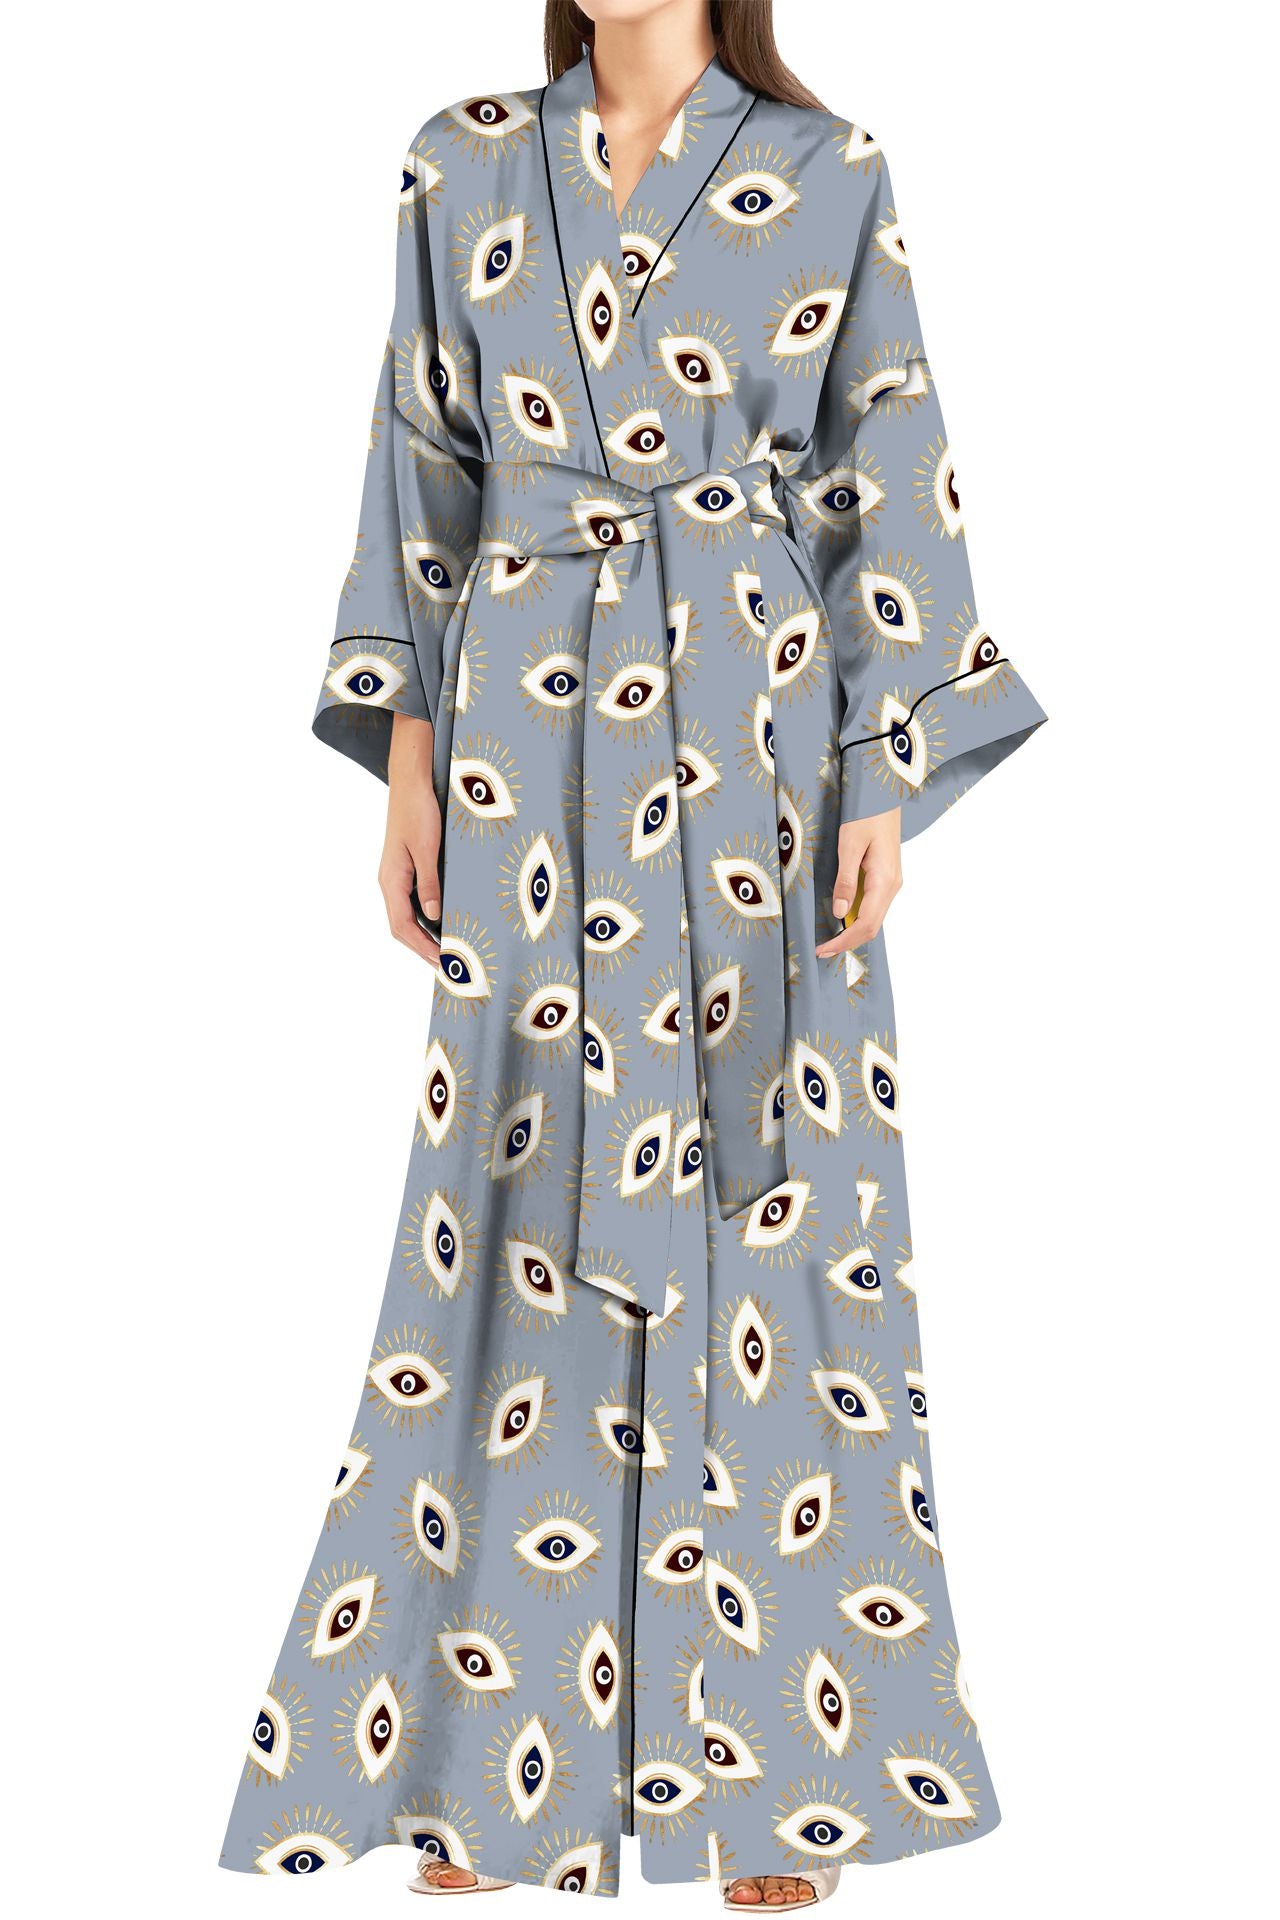 "gray robe womenss" "Kyle X Shahida" "evil eye print dress" "long silk kimono"